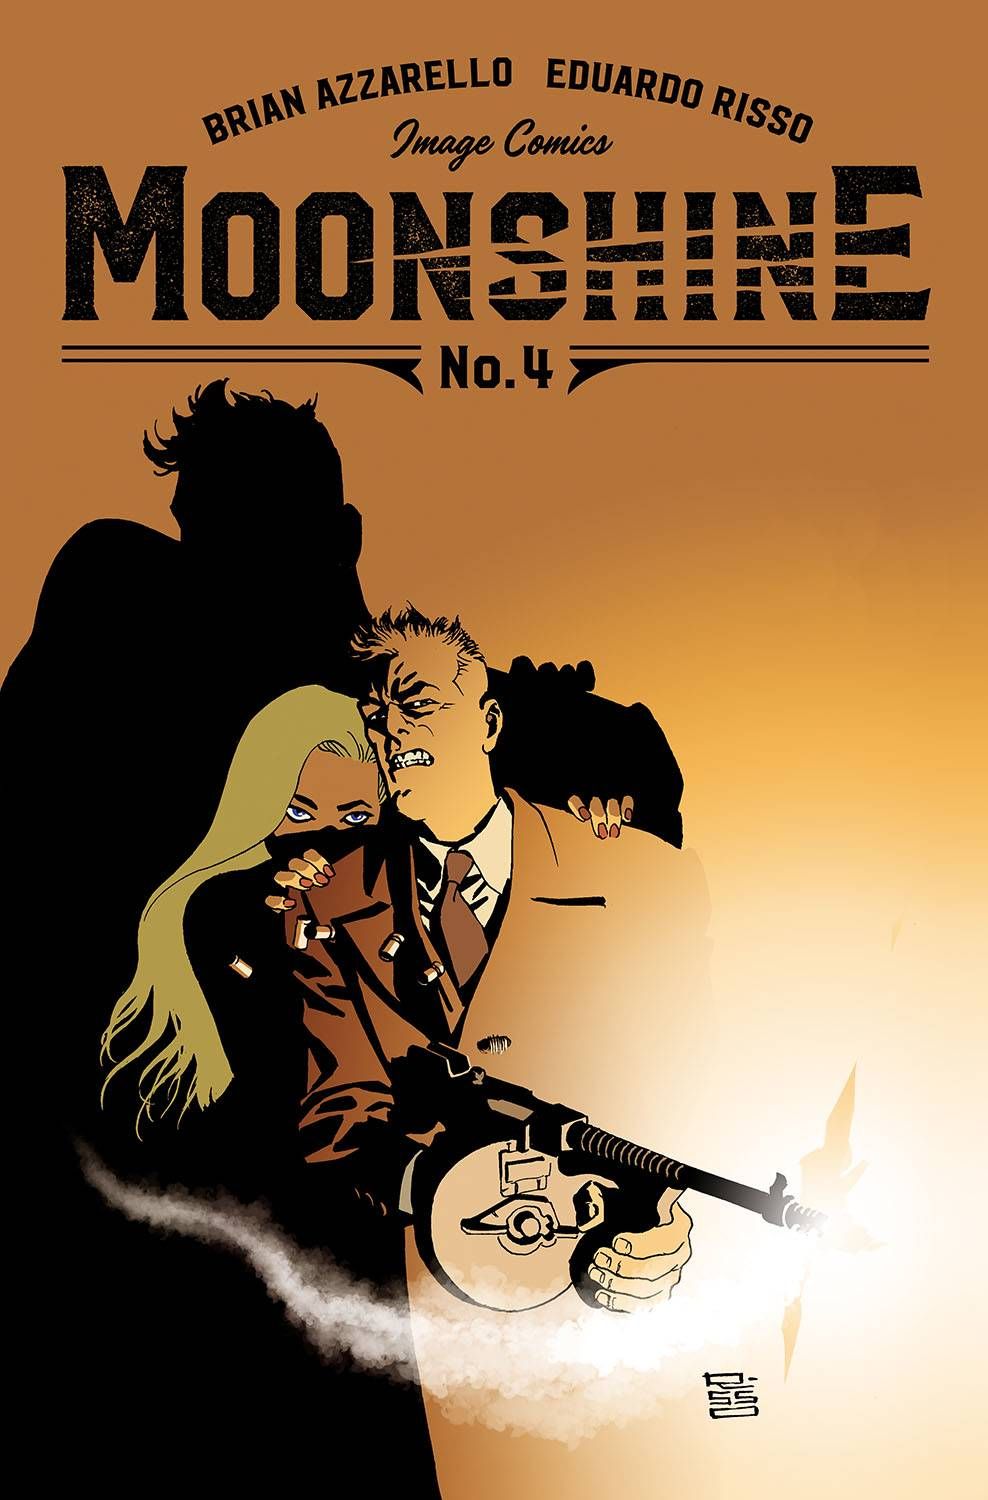 Moonshine #4 Comic